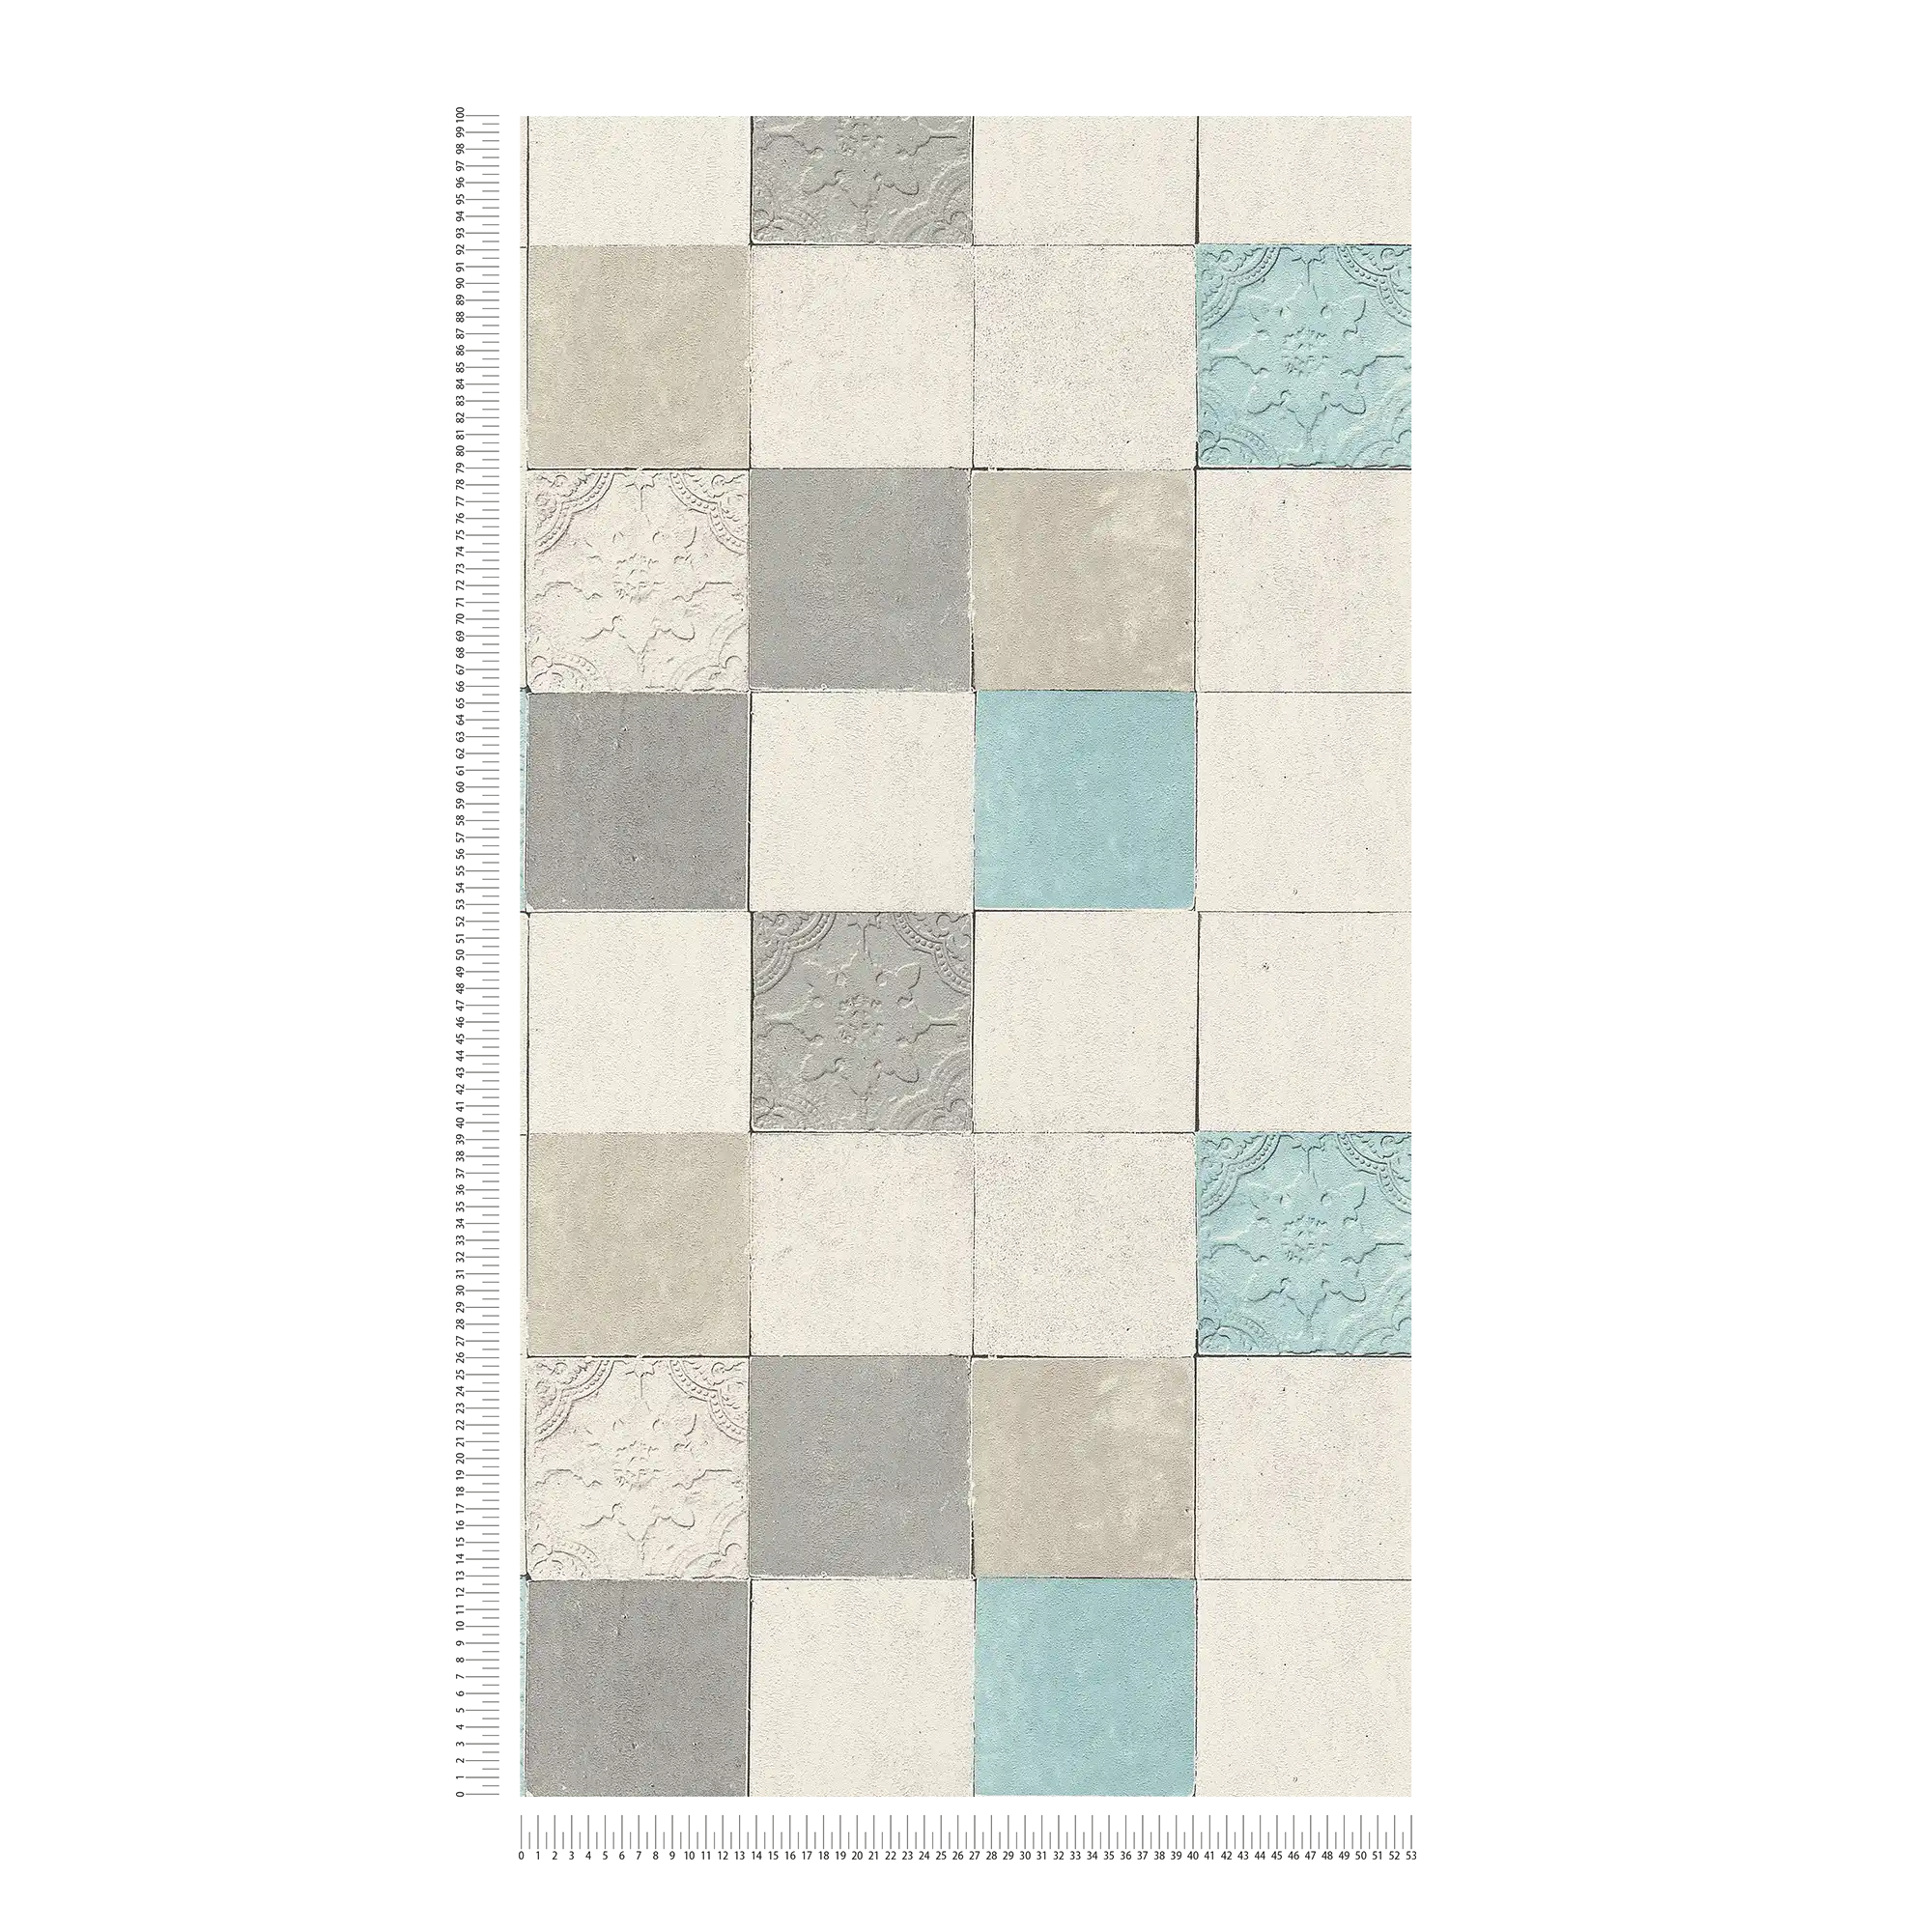             Tegelbehang decoratieve tegels mozaïek - grijs, blauw, crème
        